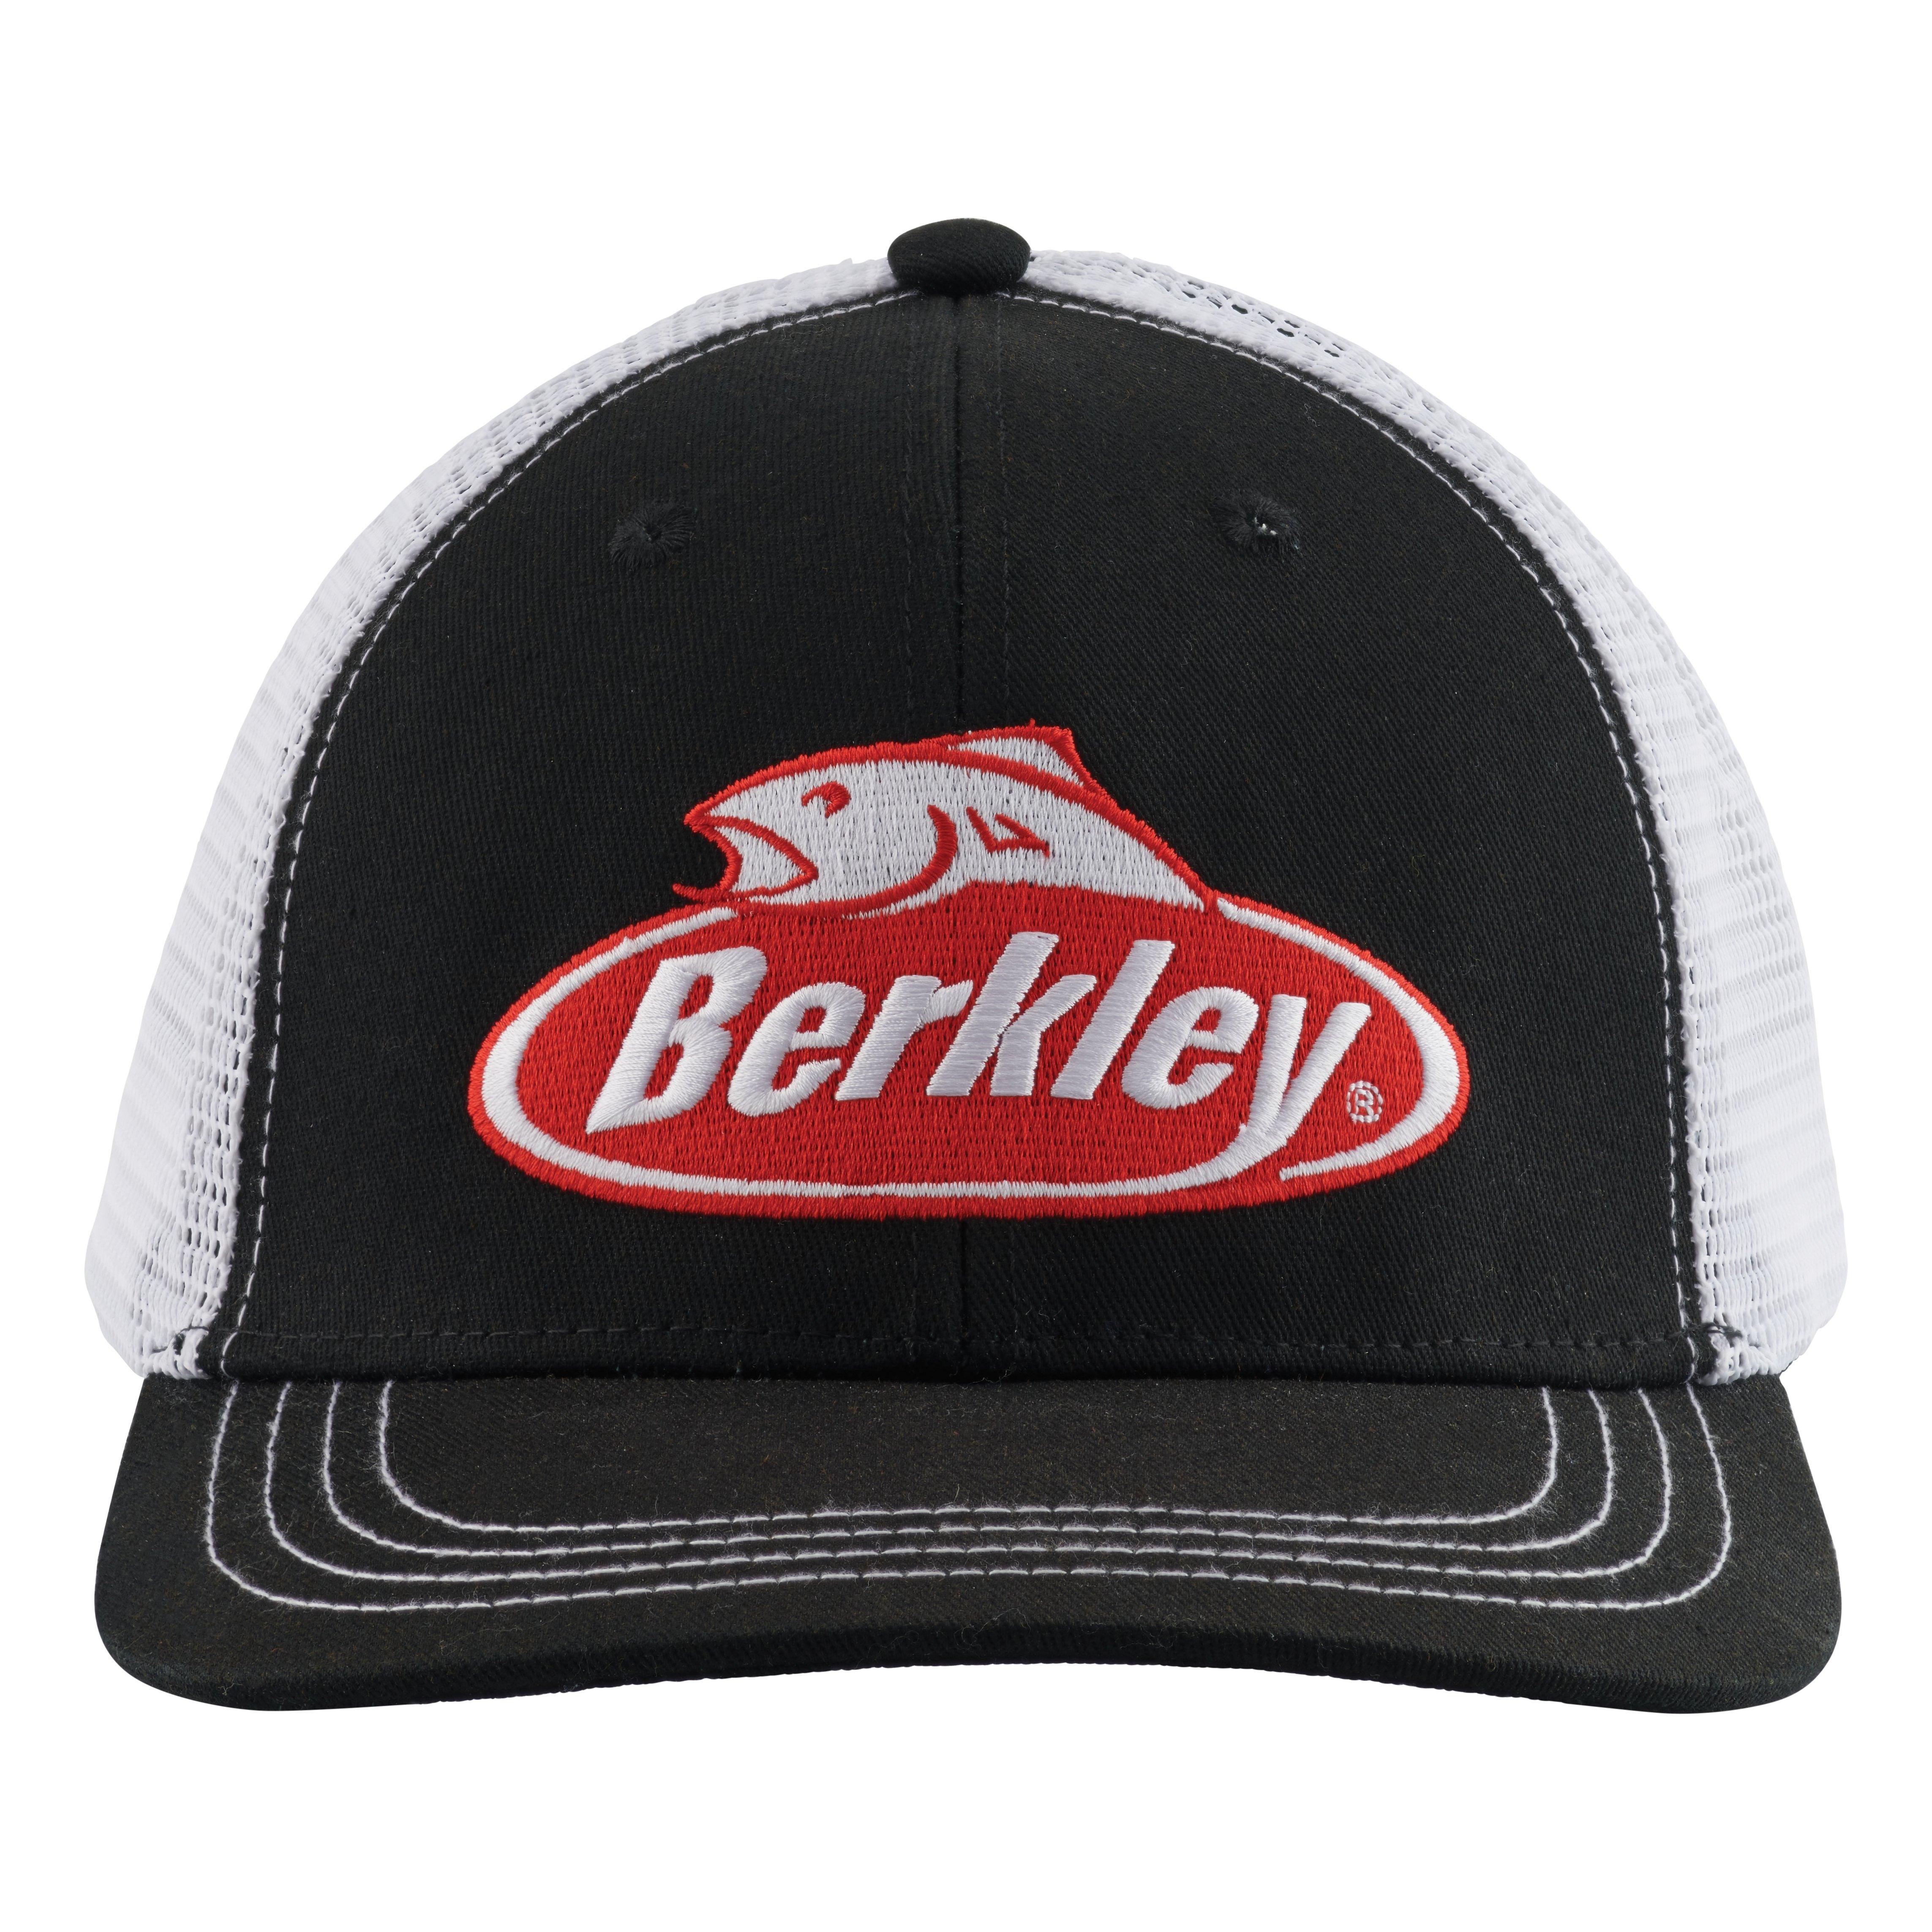 BERKLEY TRILENE Original Vintage Trucker Hat Fishing Line Rod